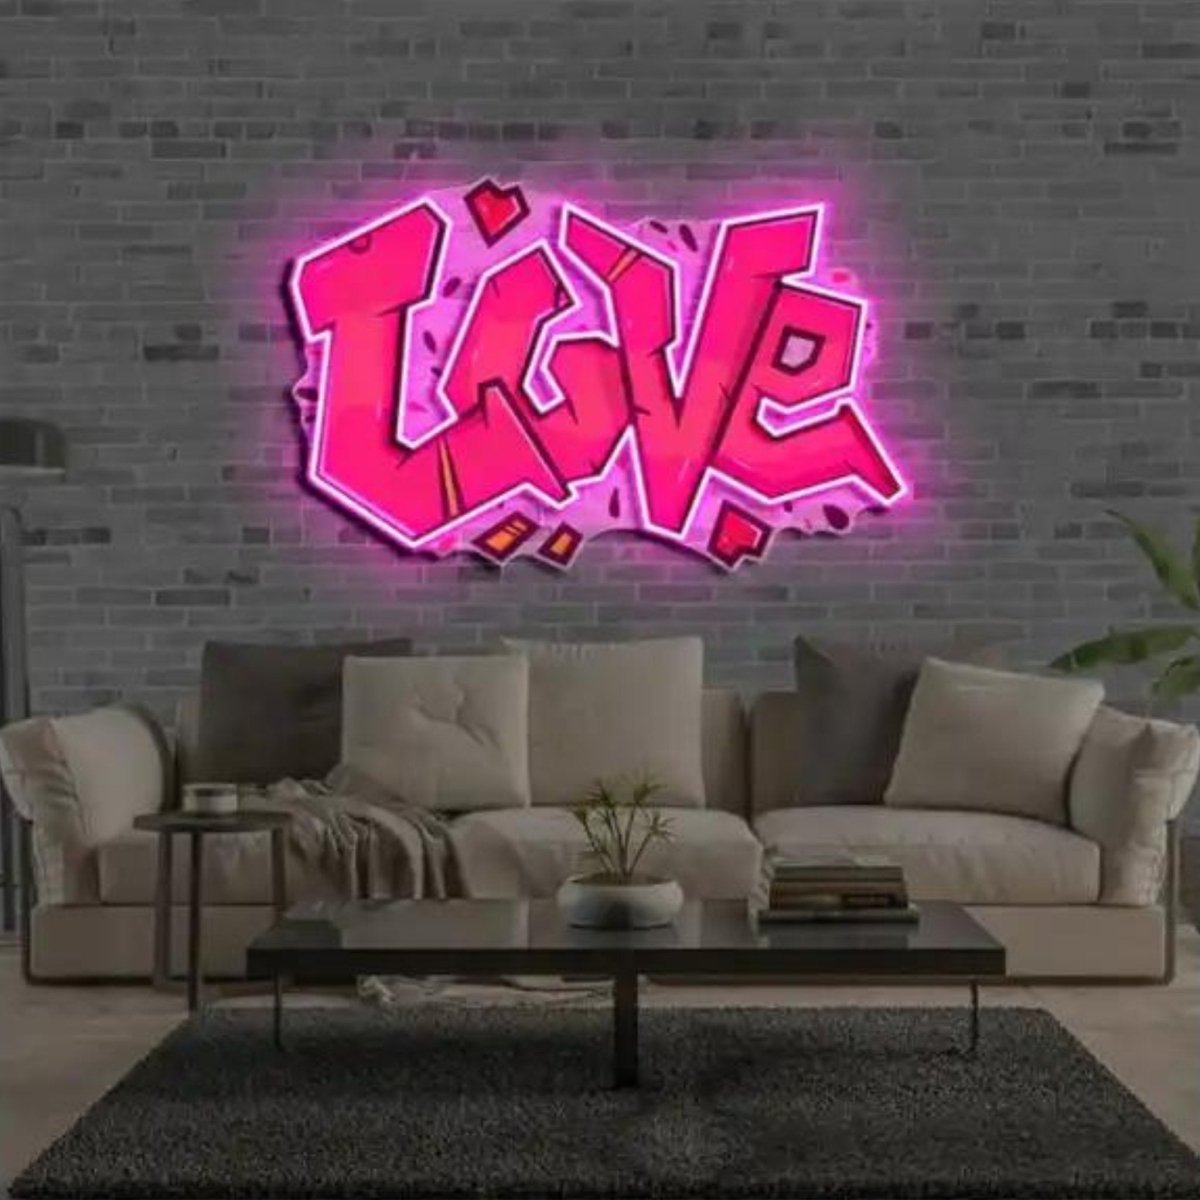 Love LED Neon Sign - Artwork Lights Neon Sign